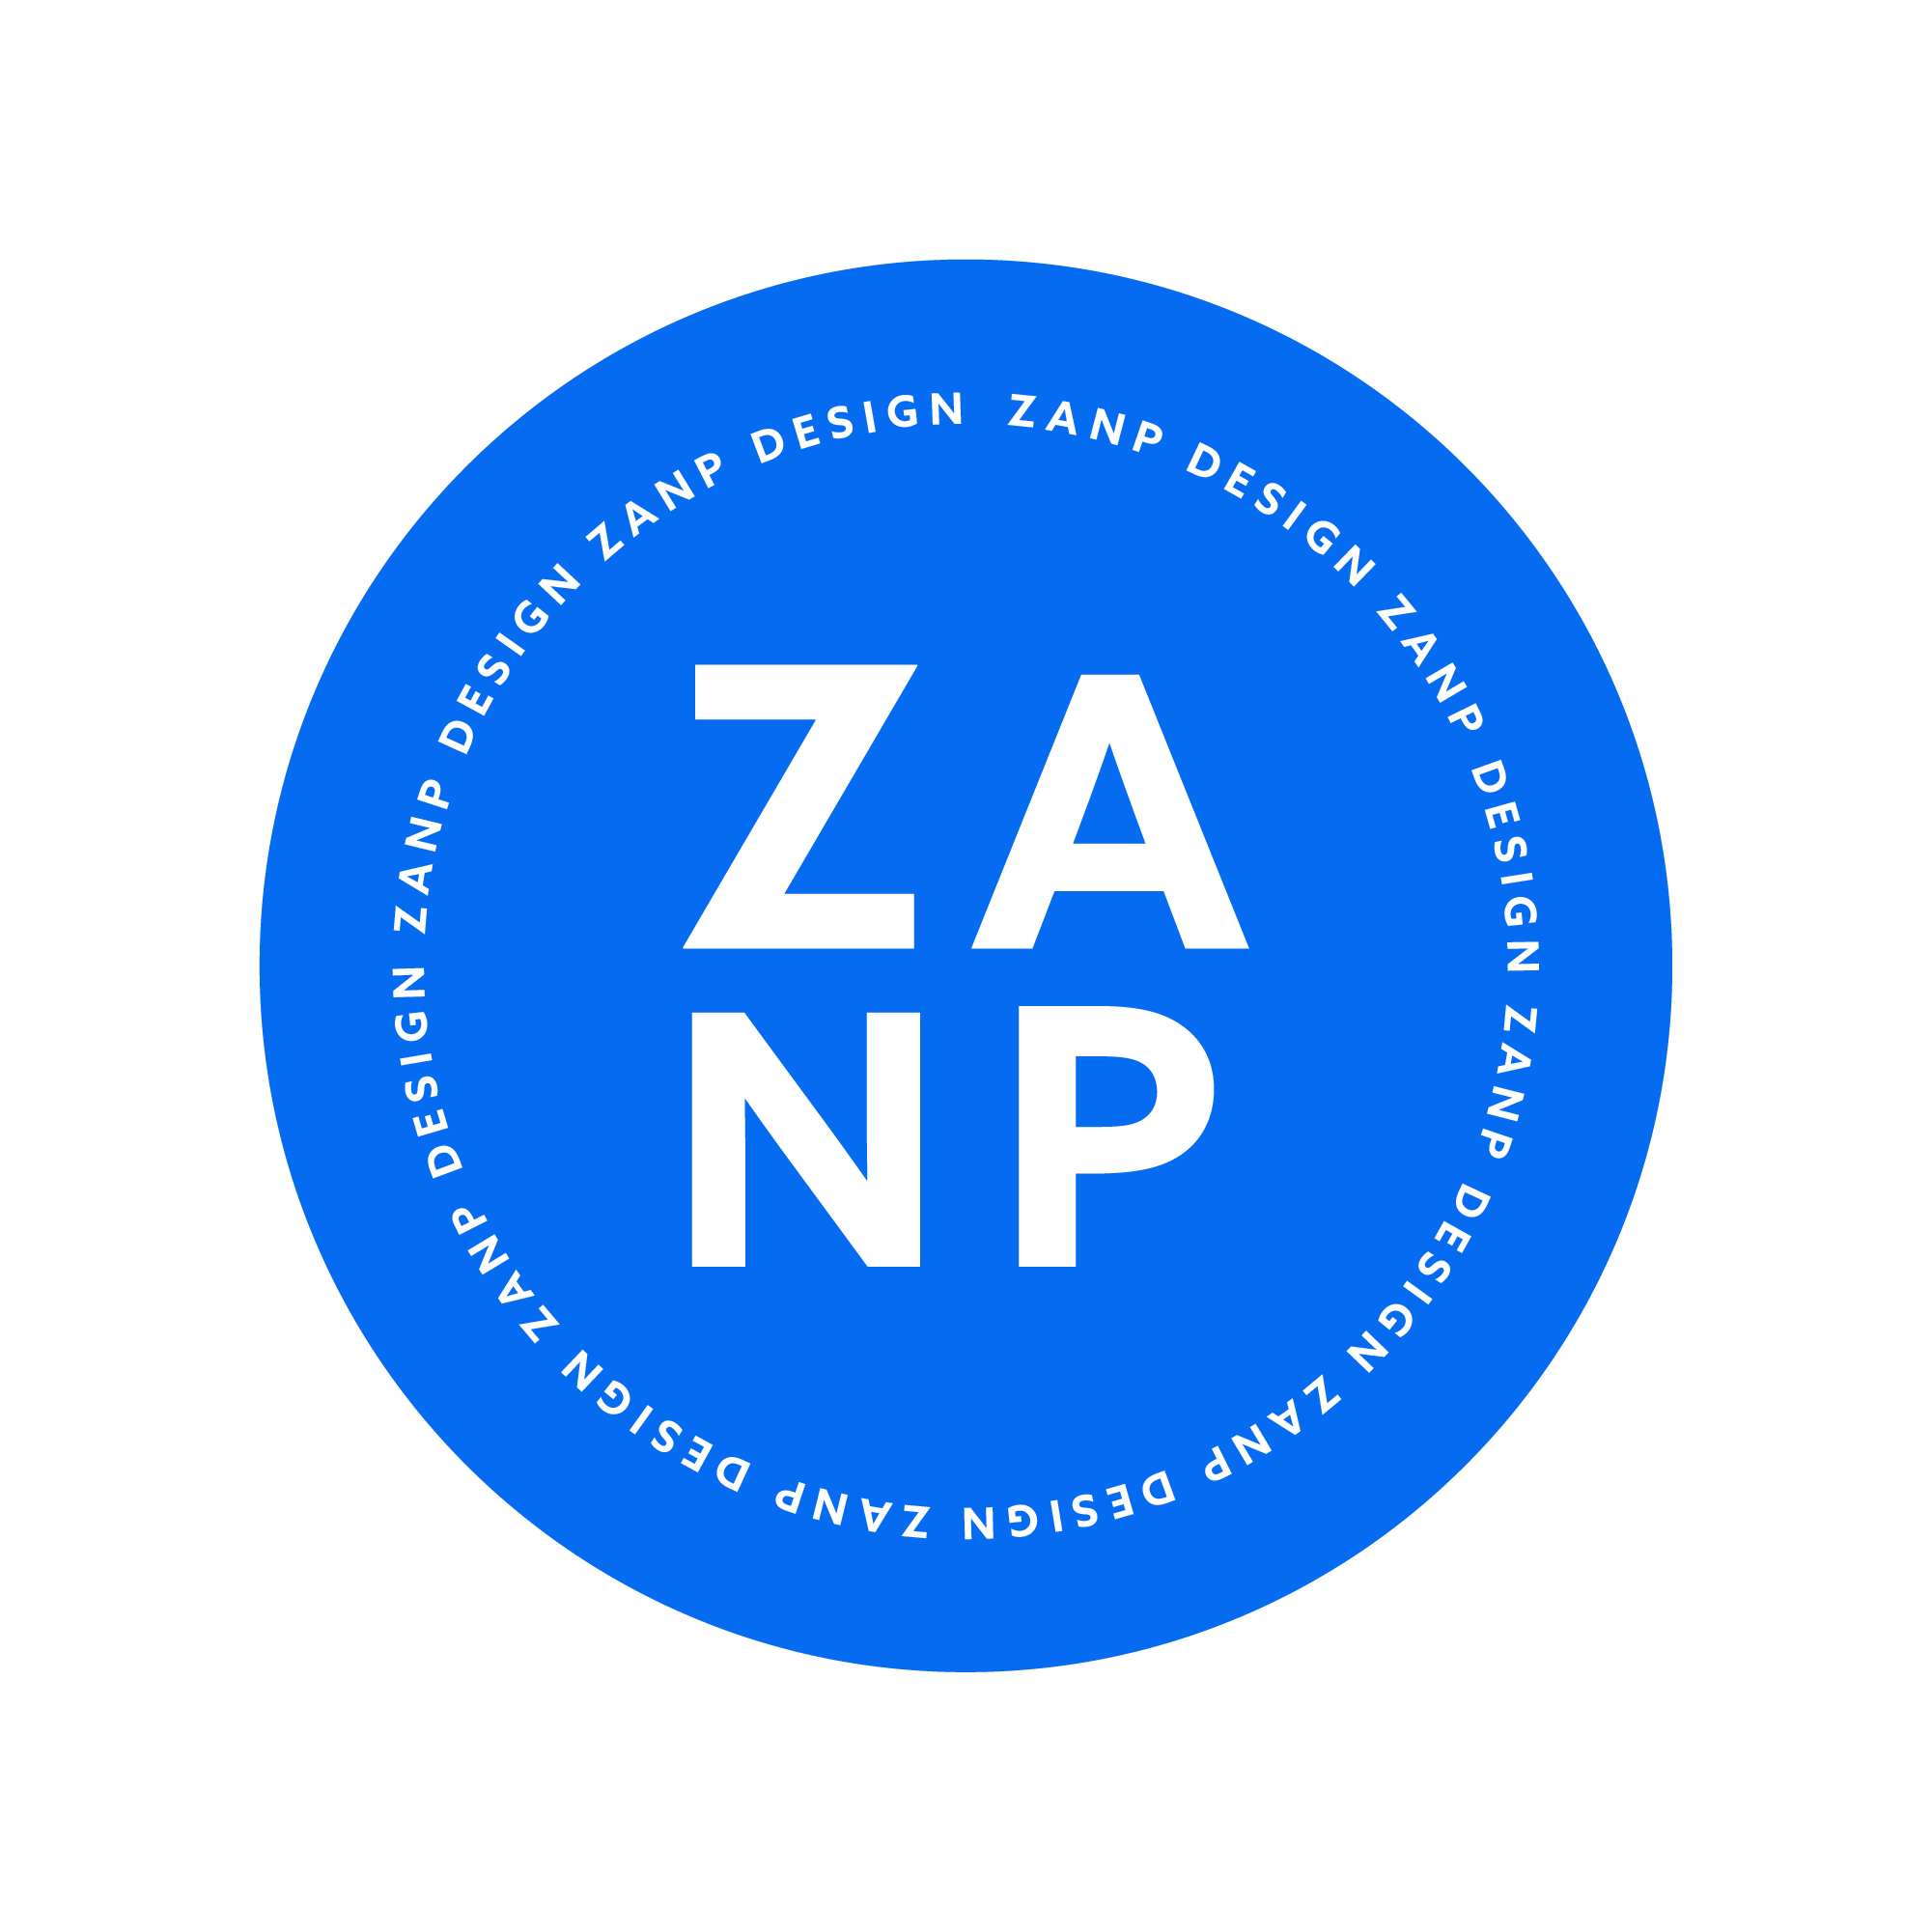 Zanp Design - Identidade Visual para marcas - Fael Toddy 17 - Identidade  visual e logotipo